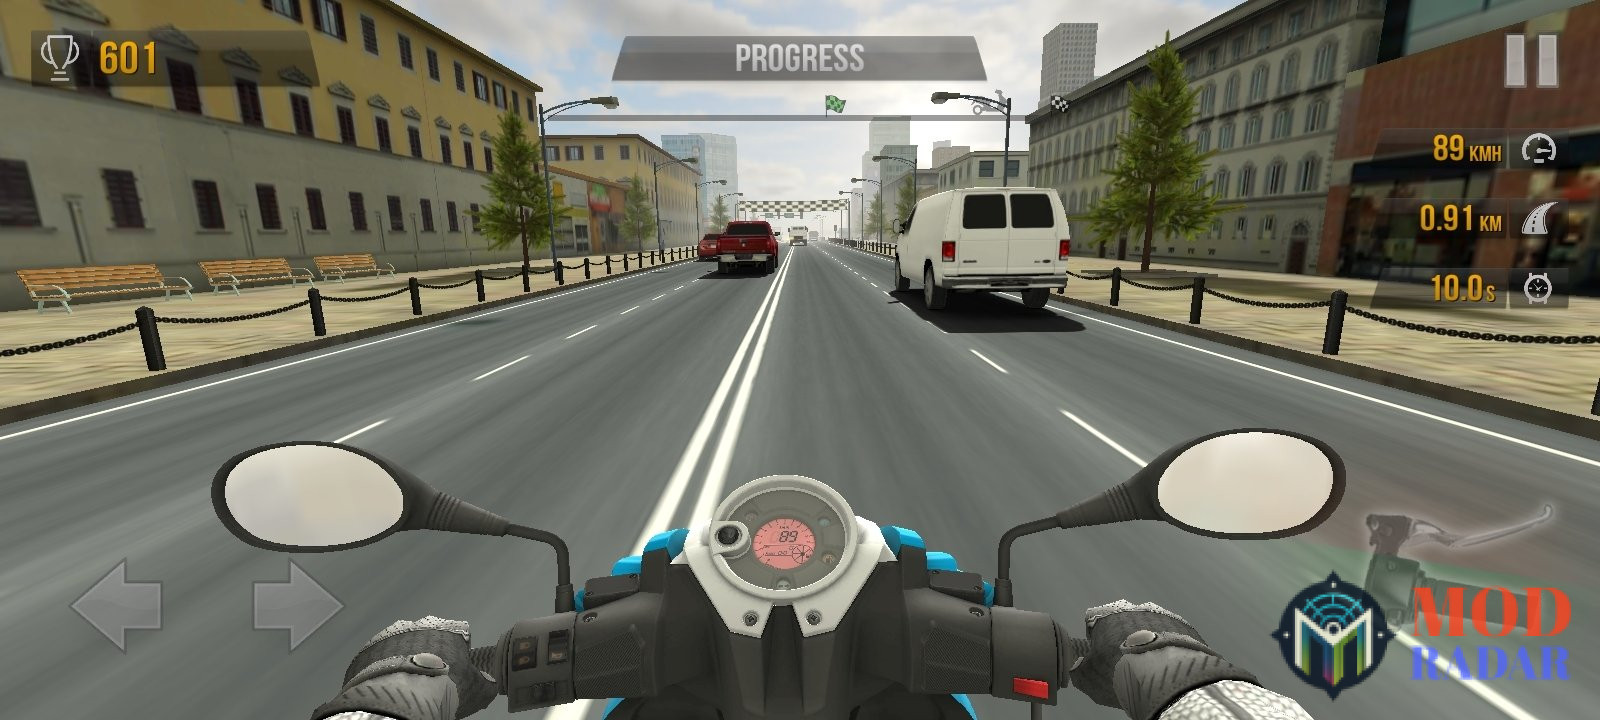 Cot truyen hap dan cua Traffic Rider 1 Tải Traffic Rider MOD (Vô Hạn Tiền) APK cho Android